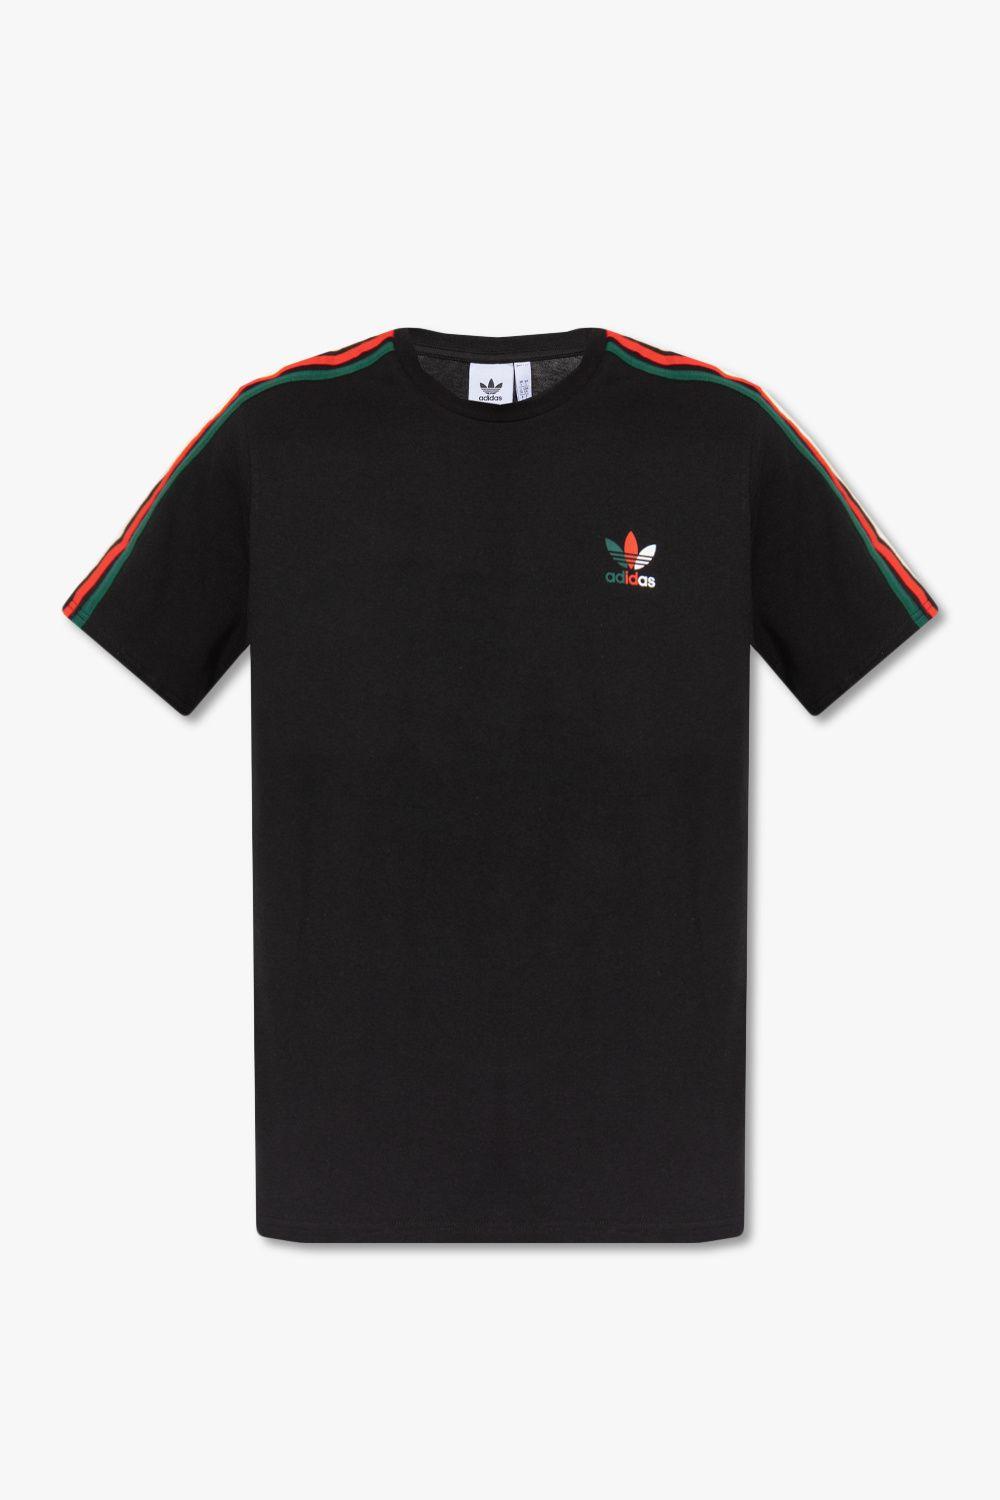 adidas Originals T-shirt With Logo in Black for Men